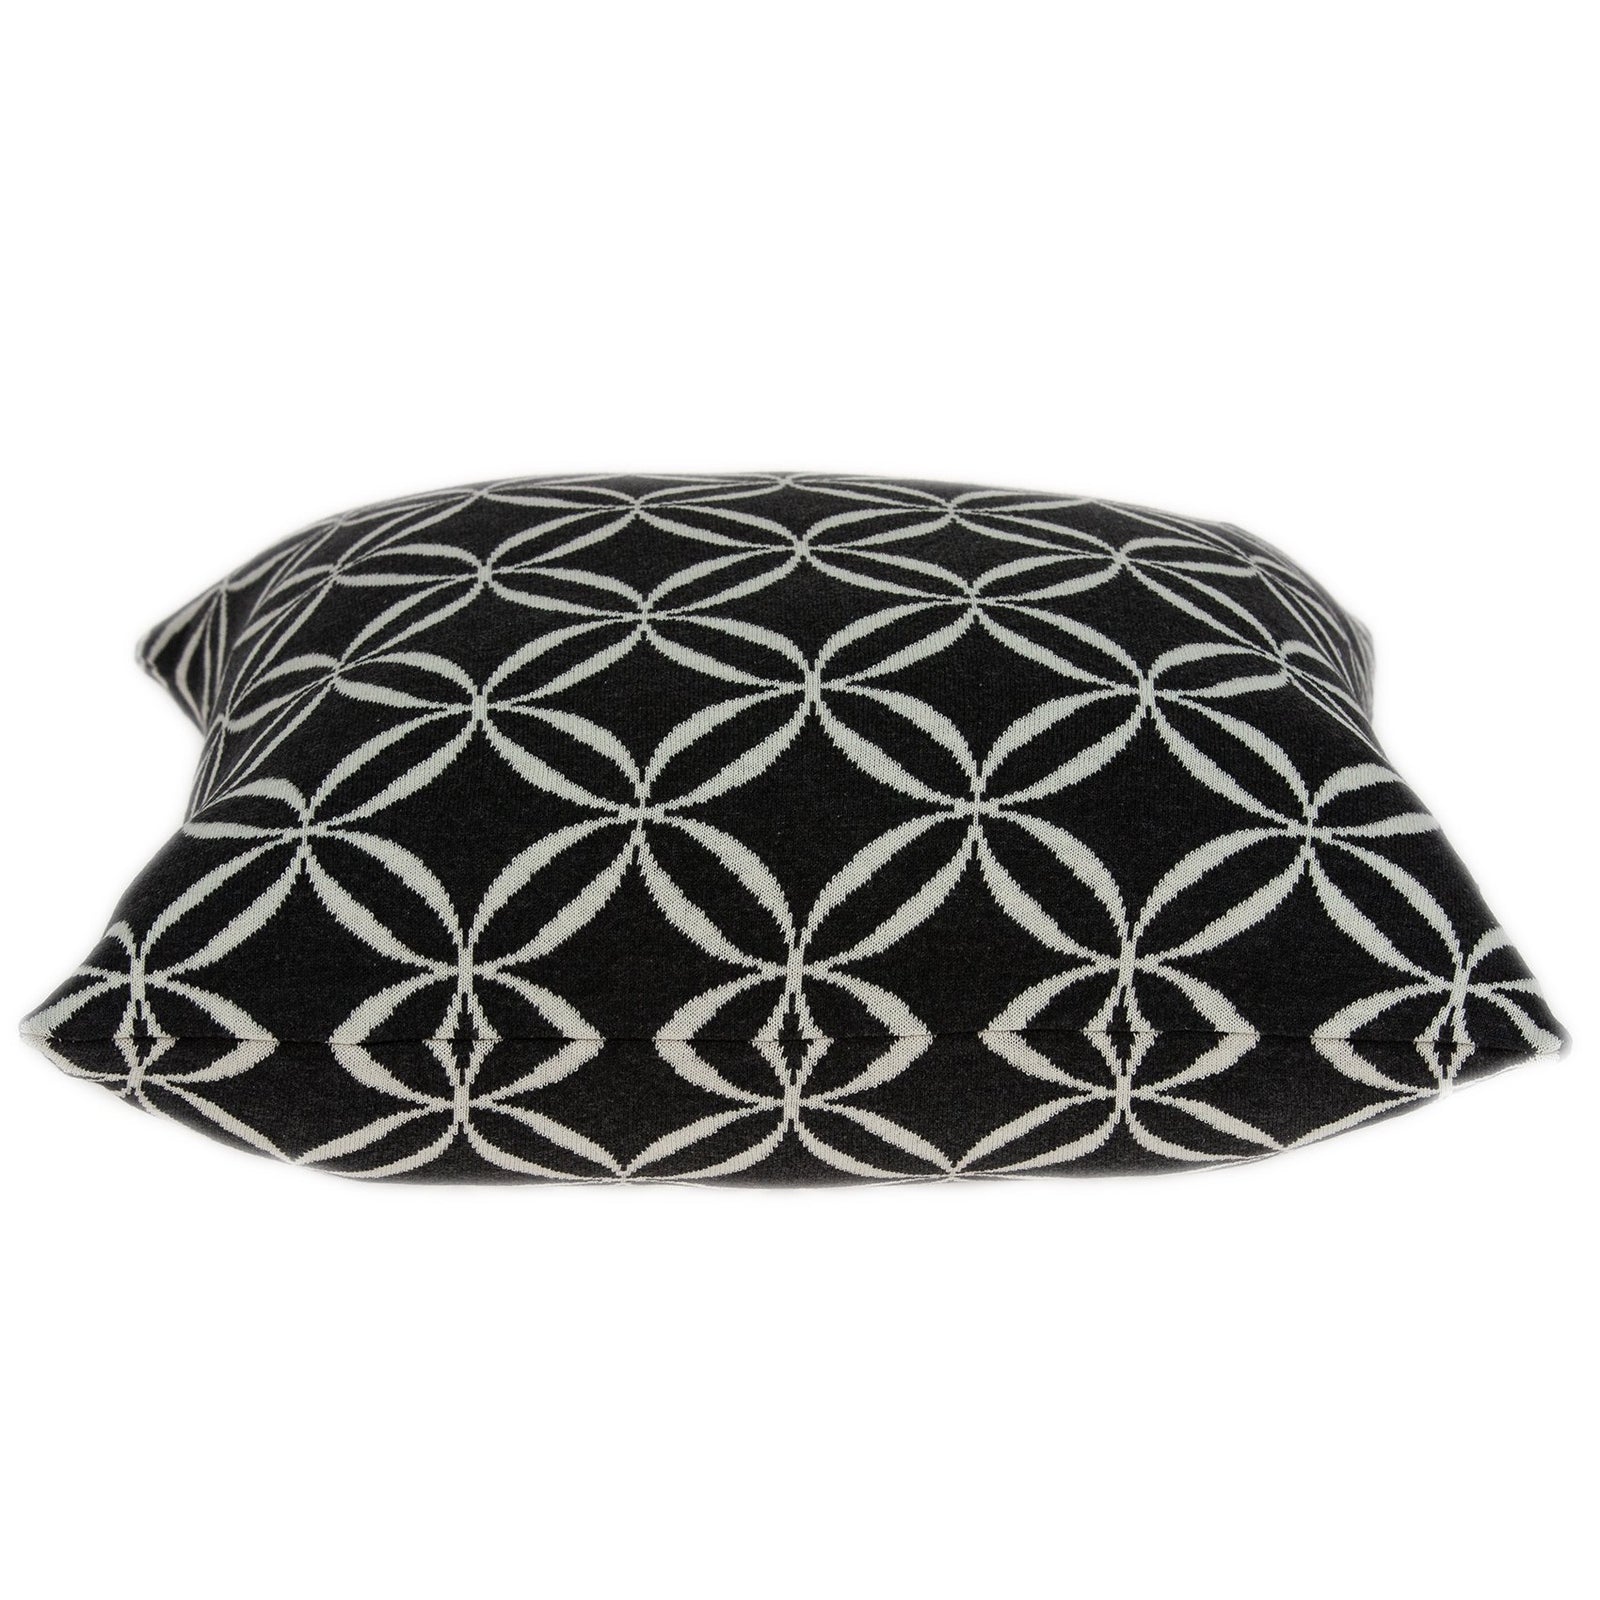 Geometric Design Black And White Cotton Pillow Cover